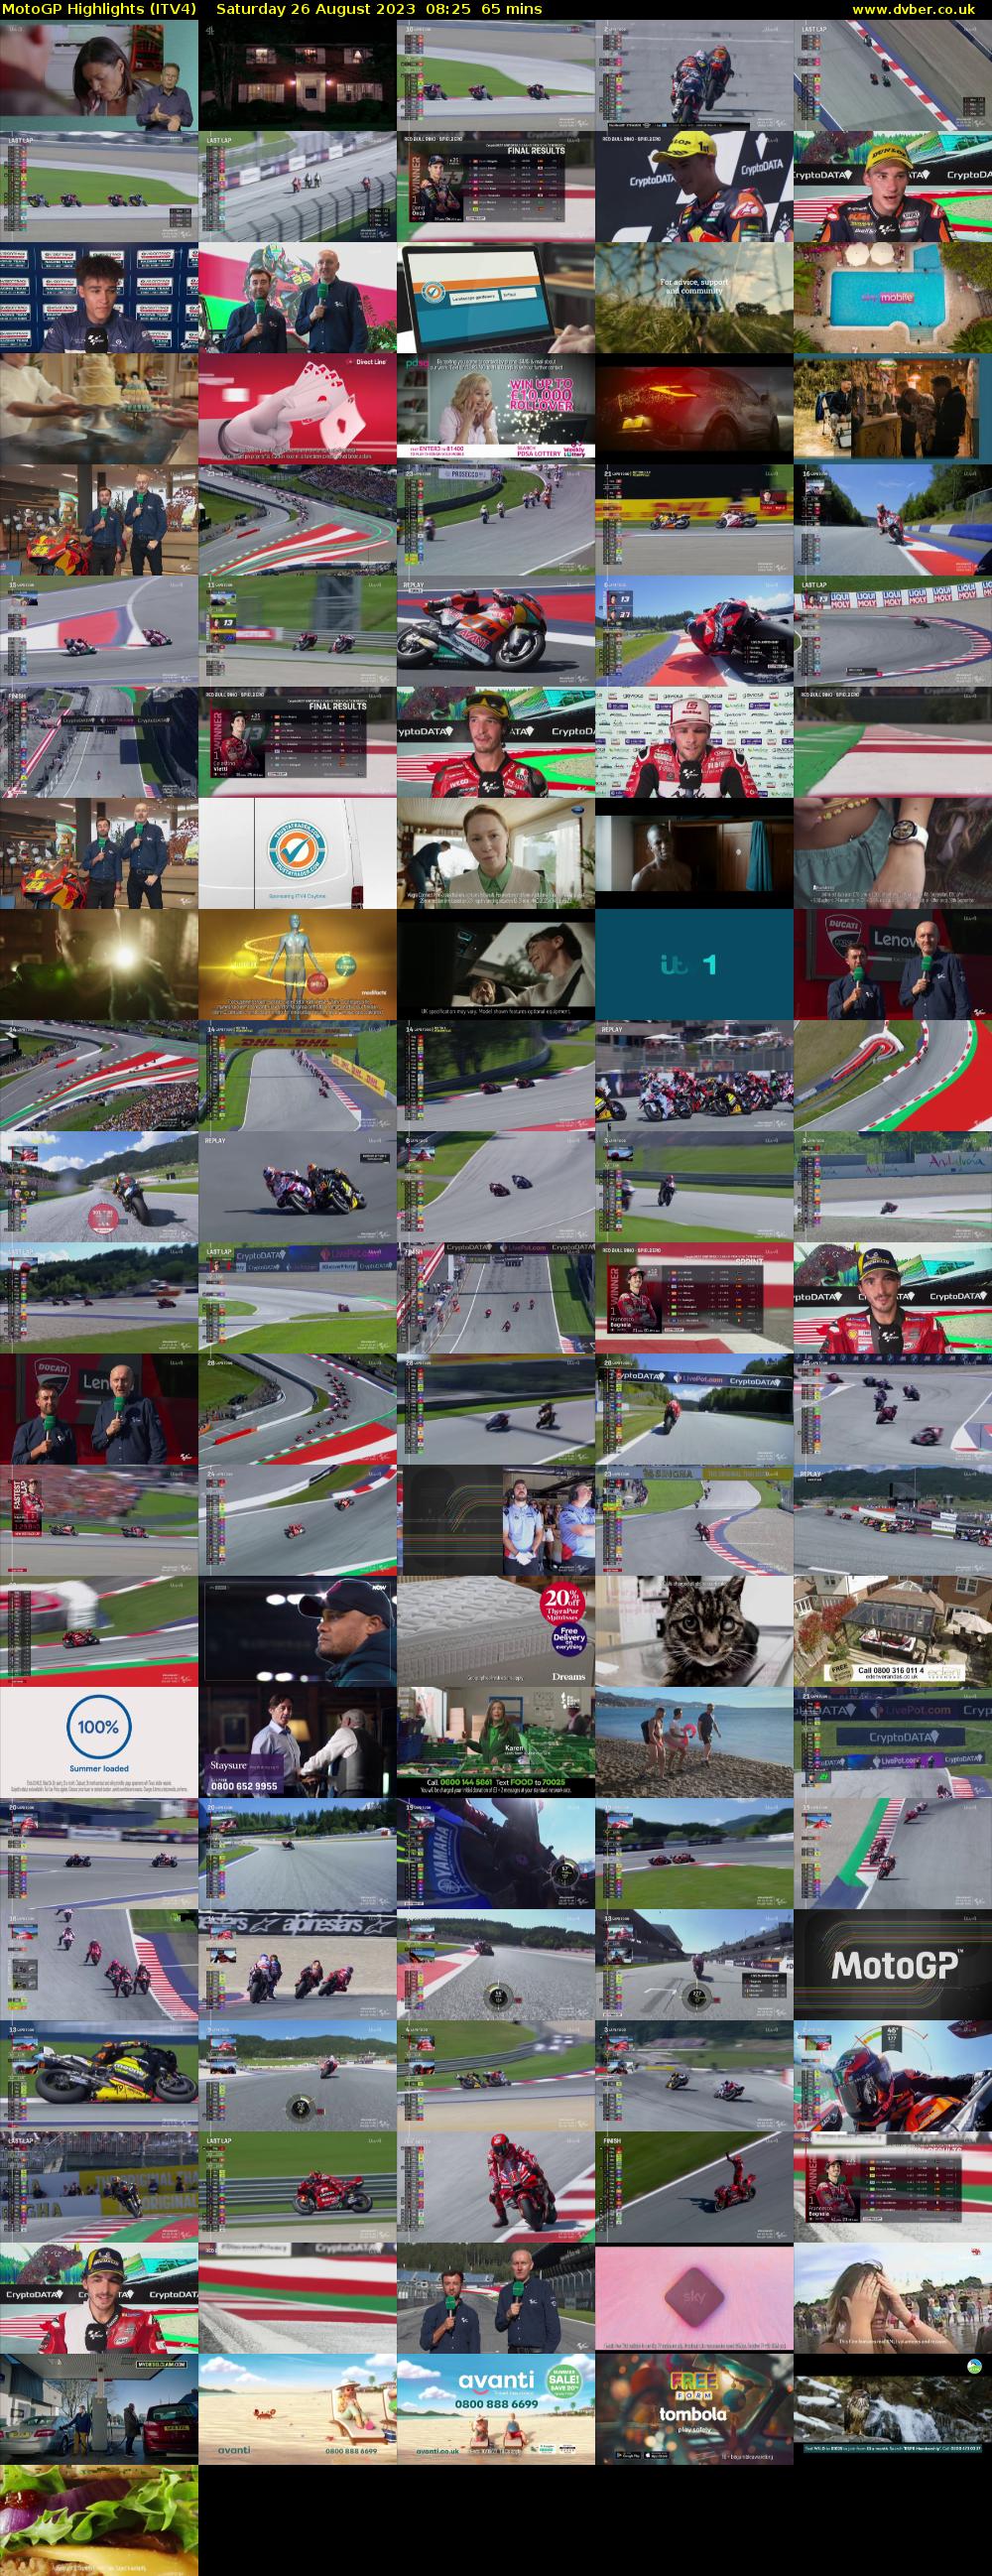 MotoGP Highlights (ITV4) Saturday 26 August 2023 08:25 - 09:30